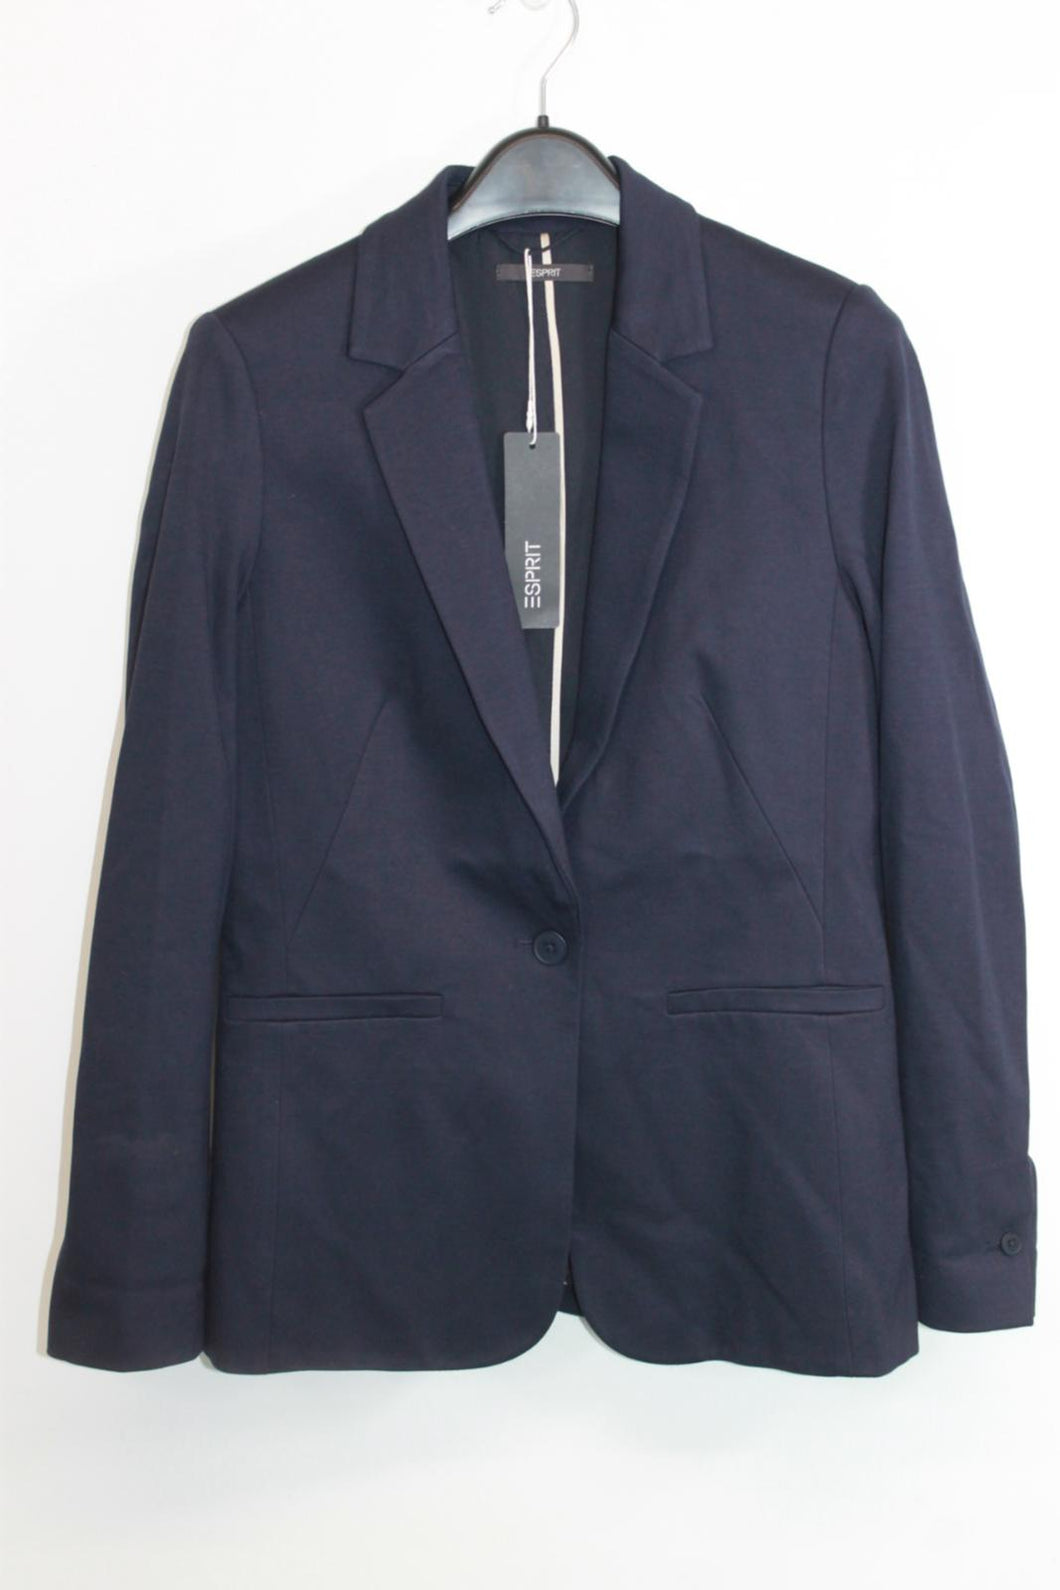 ESPRIT Ladies Navy Blue Blazer Jacket EU40 UK12 BNWT